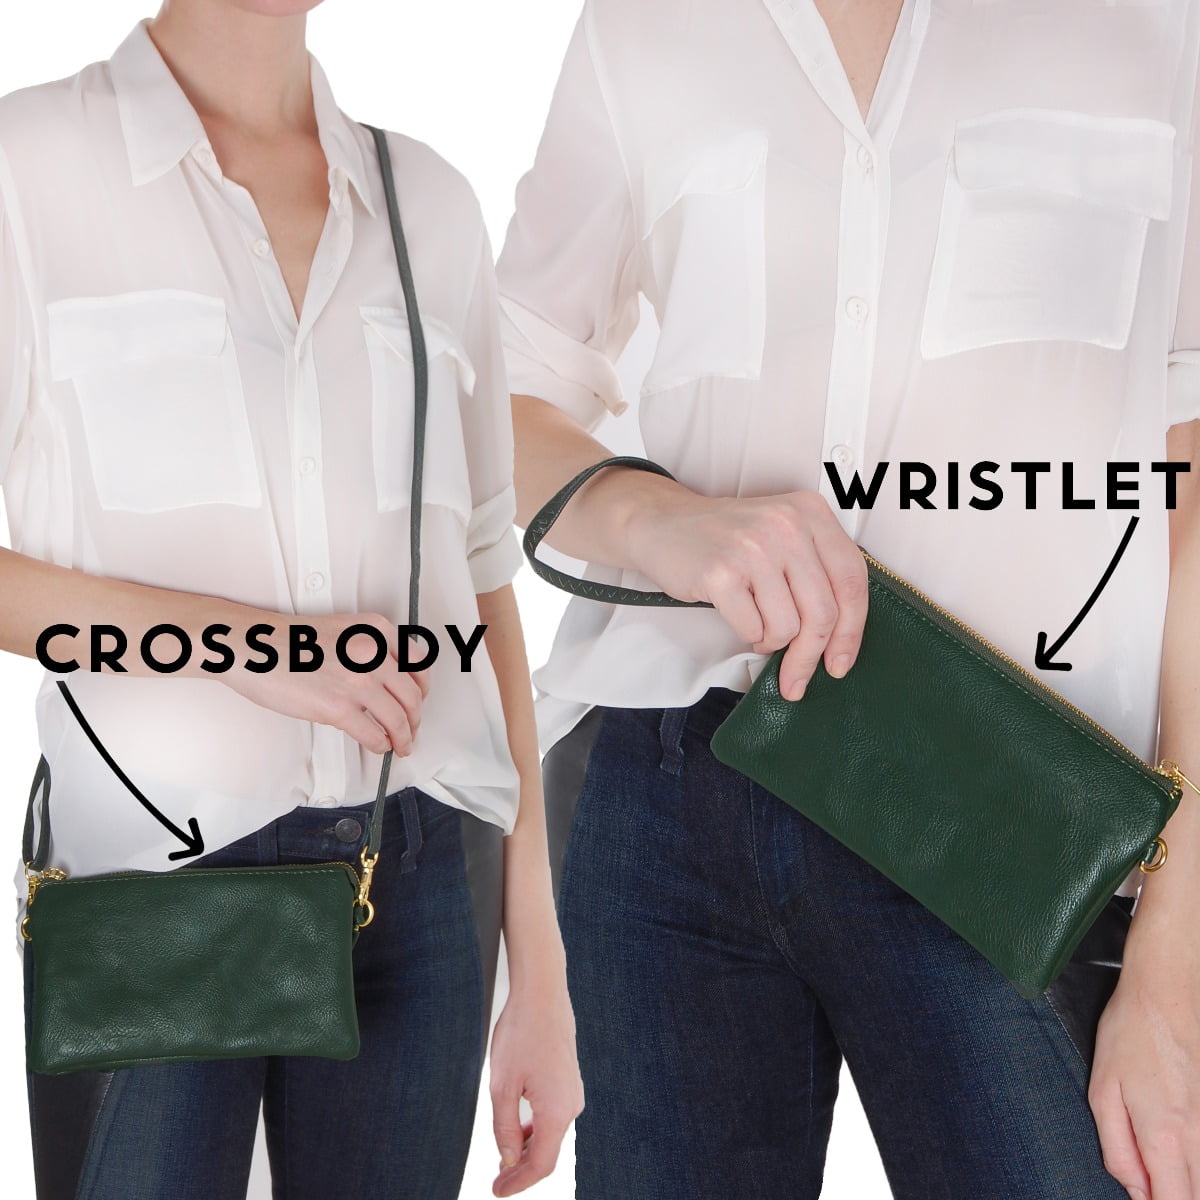 Emerald Green Velvet 5.5 Inch Clasp Purse Frame Wedding Clutch Bag – Girl  Got Bag